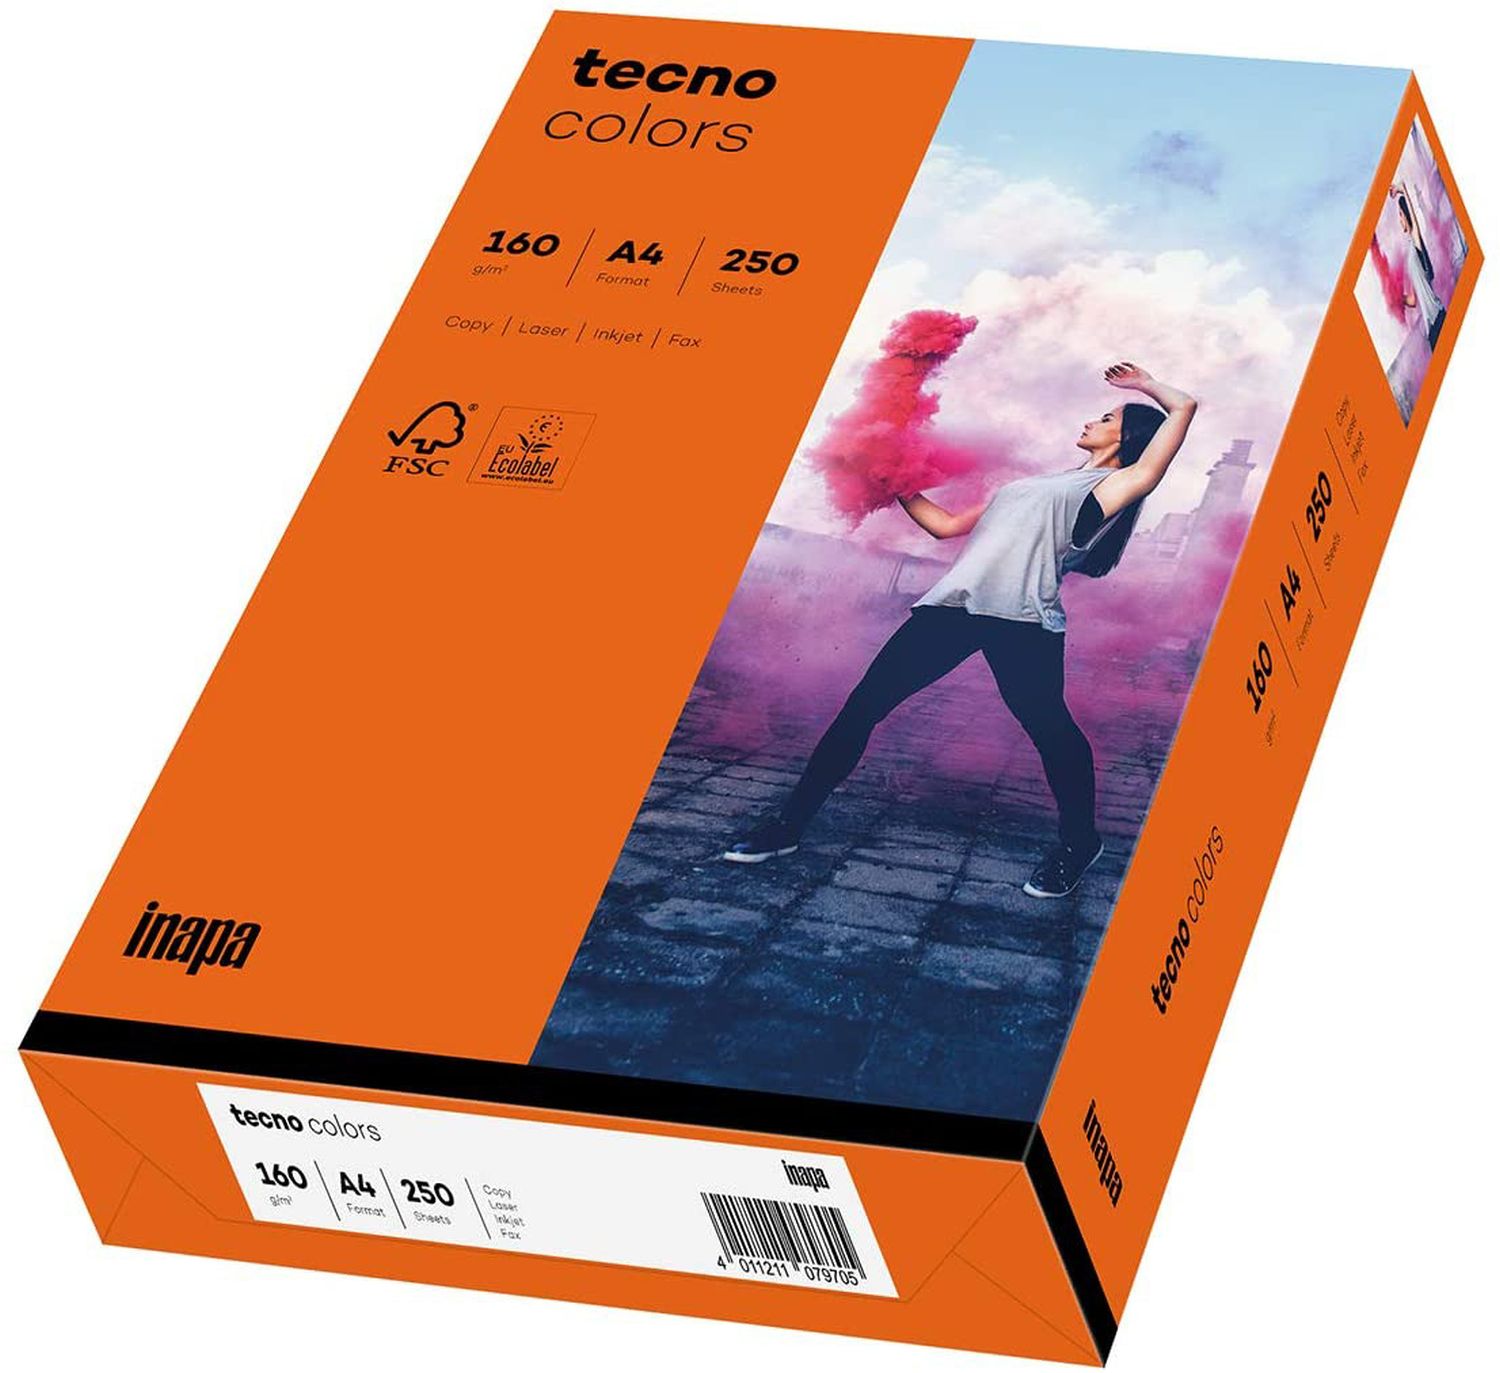 Kopierpapier Inapa tecno® colors 2100011375 DIN A4, 160 g/qm, intensivorange, Intensiv, 250 Blatt